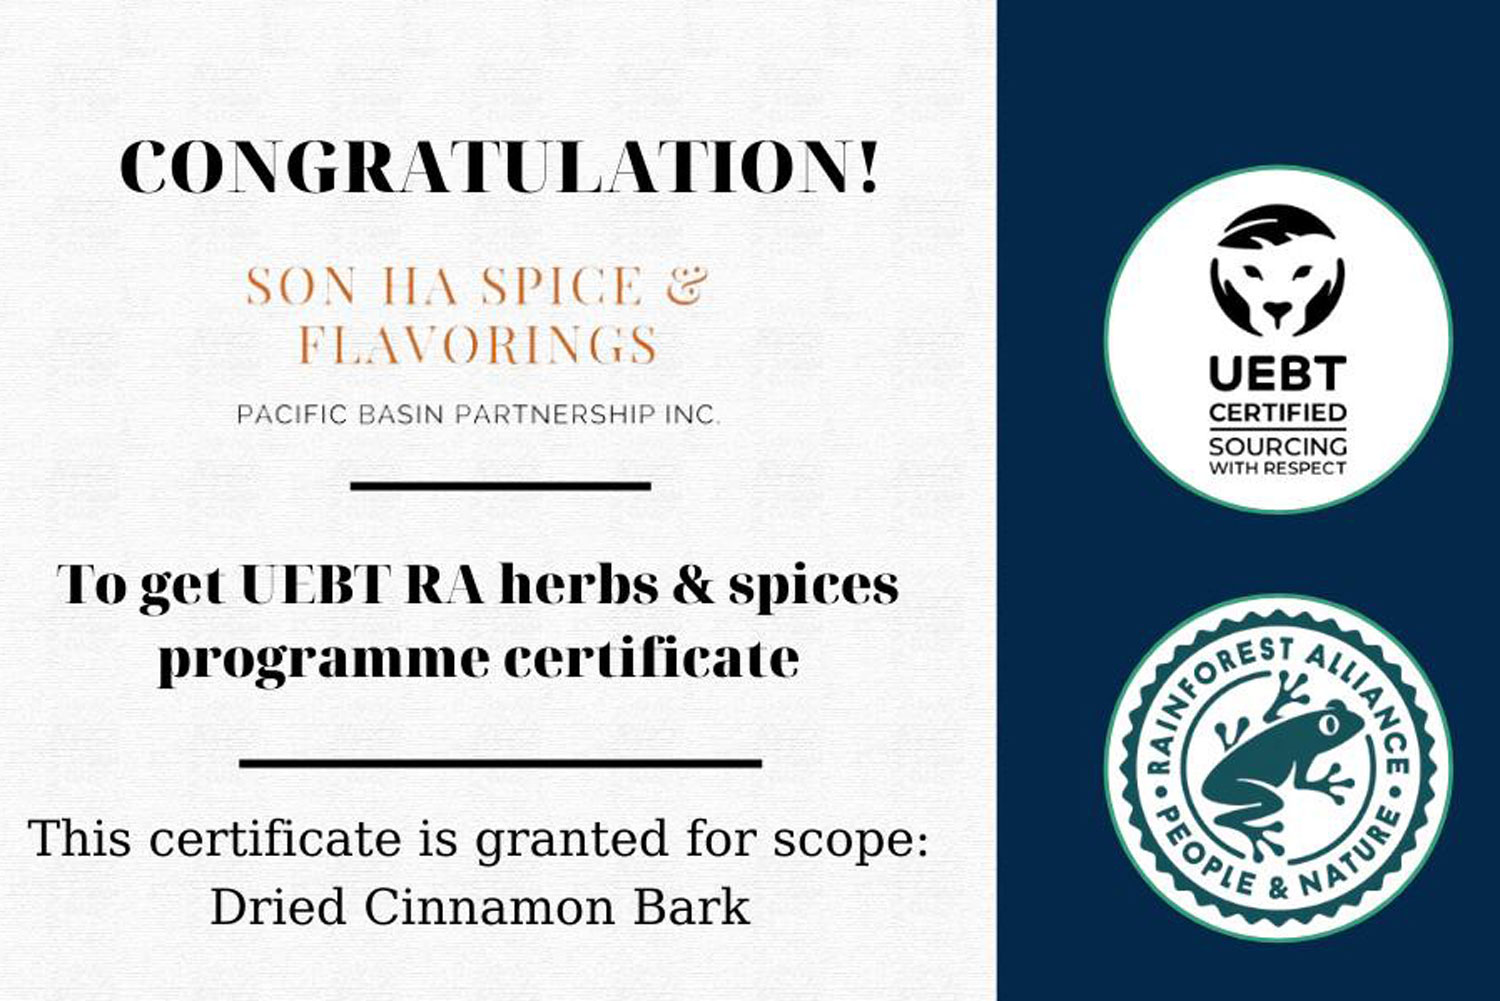 UEBT/RA Certification – Breakthrough for Vietnamese Cinnamon